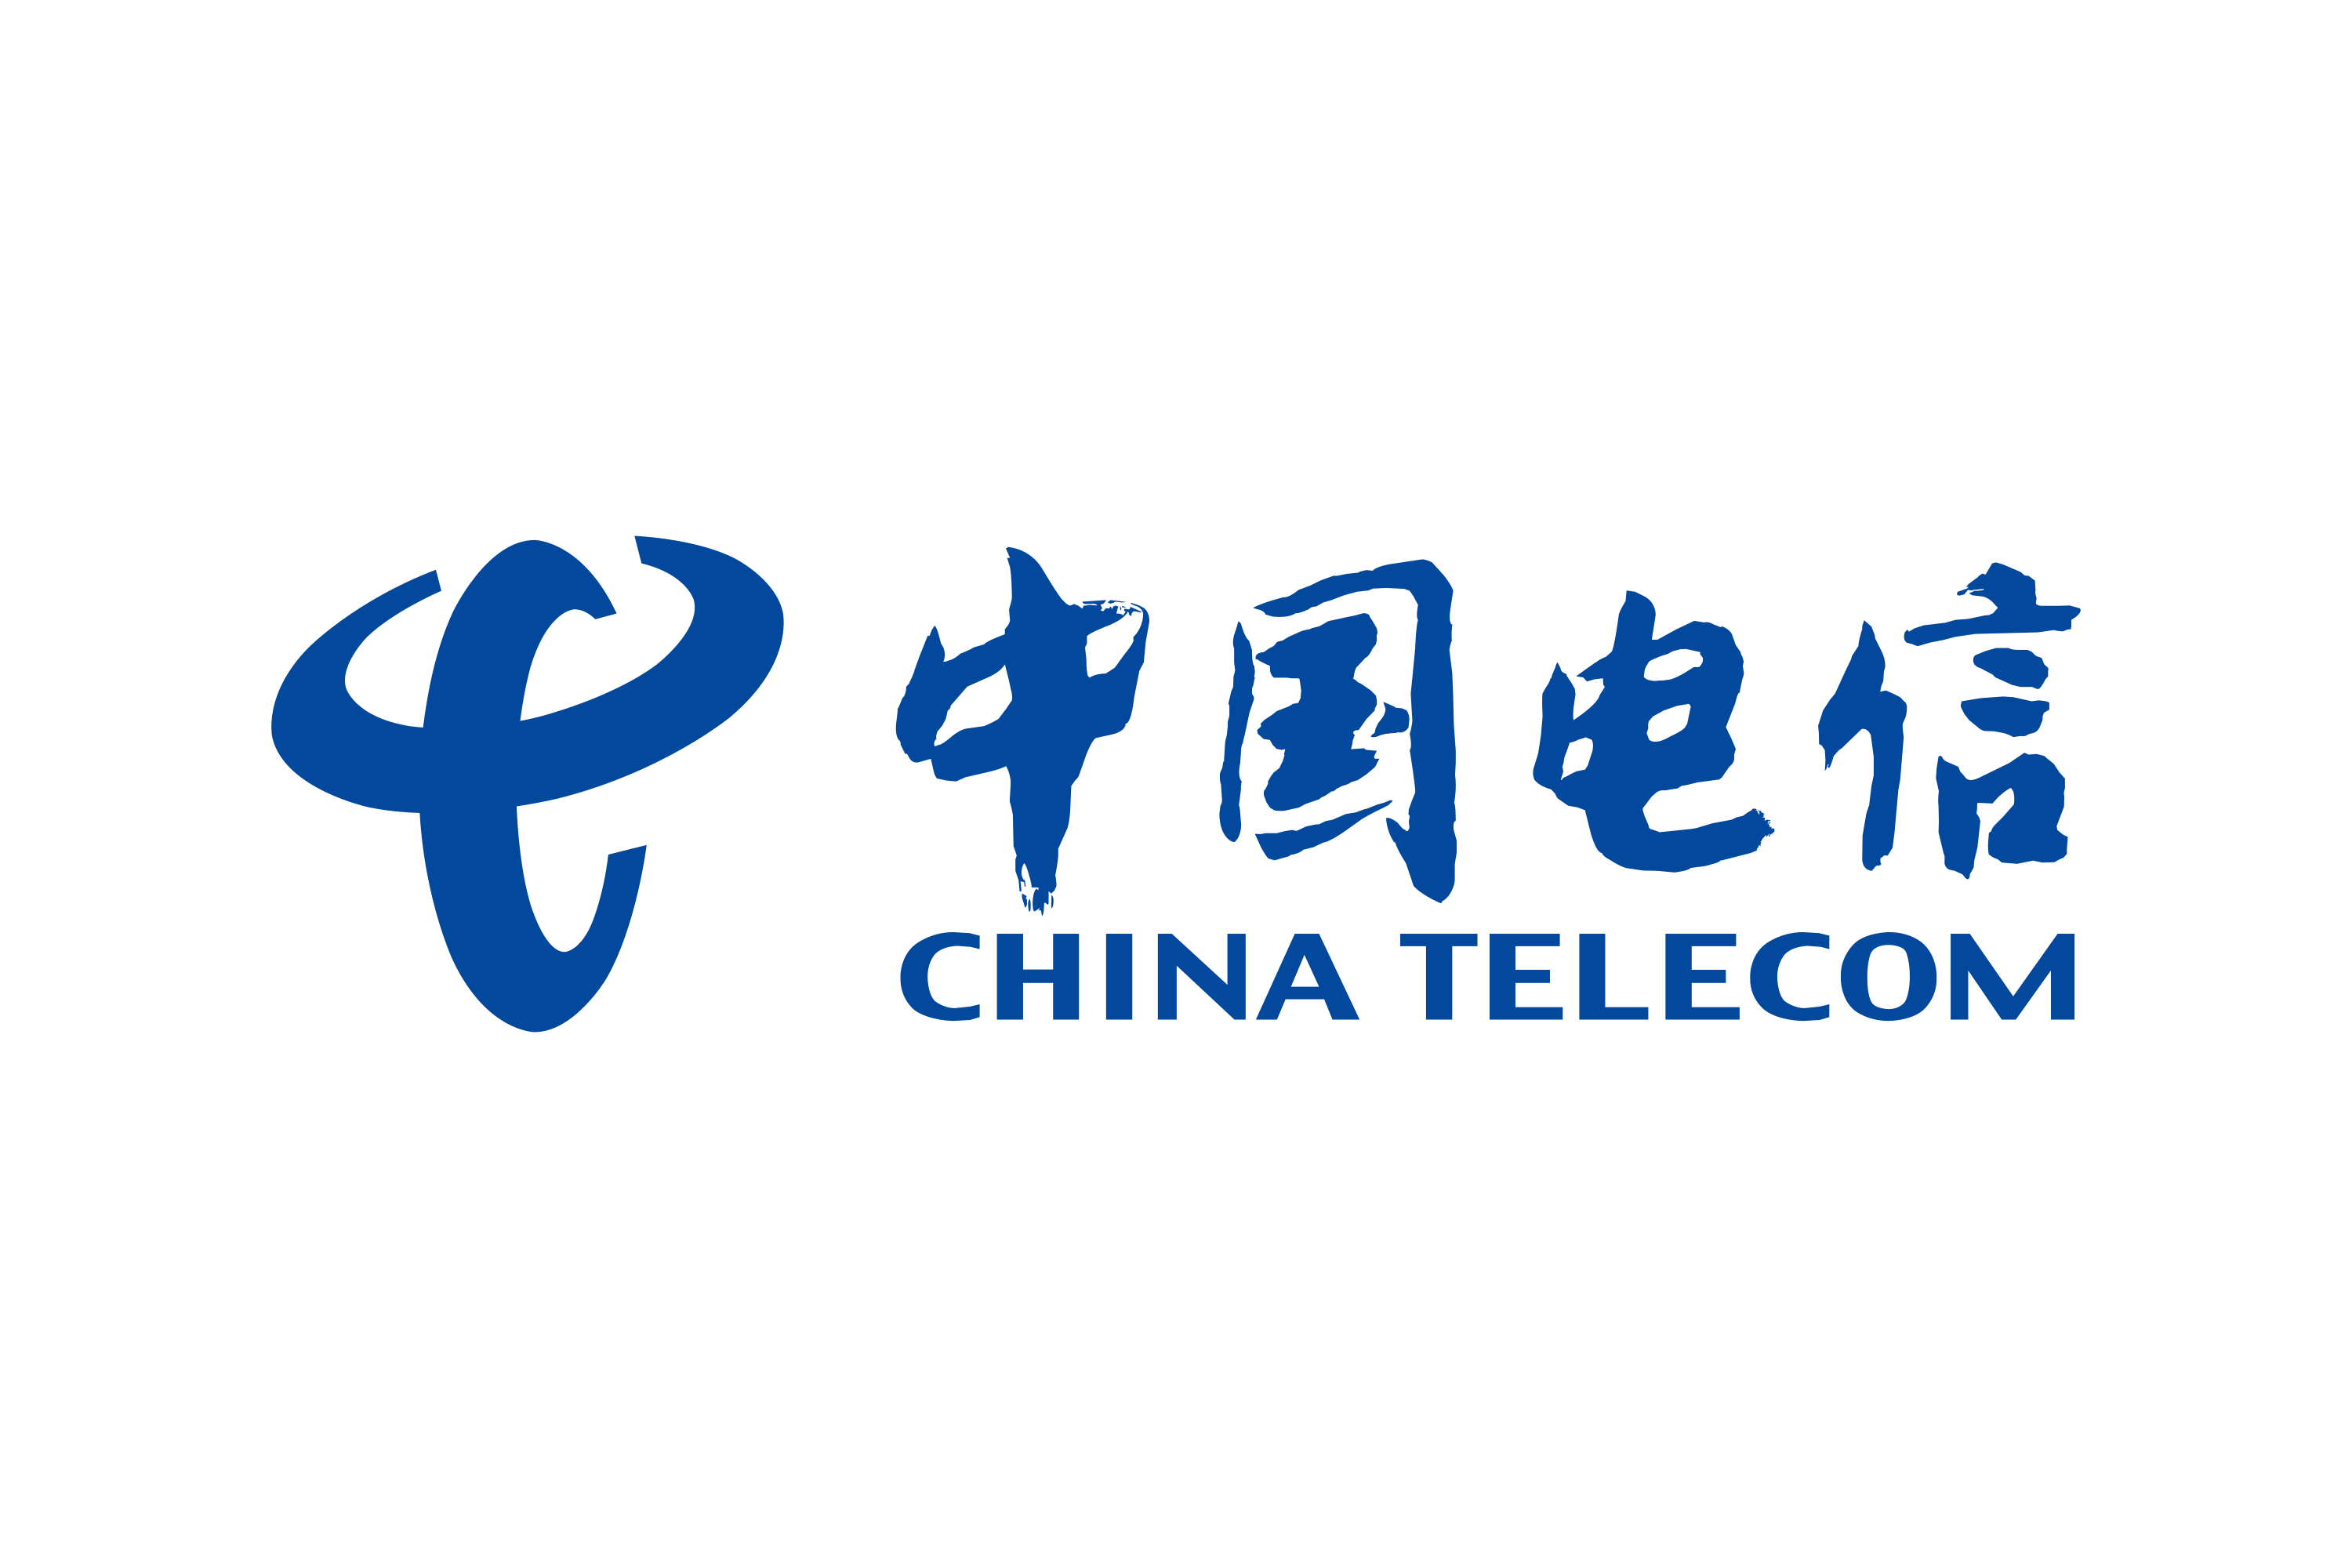 Telecommunication Provider Logos